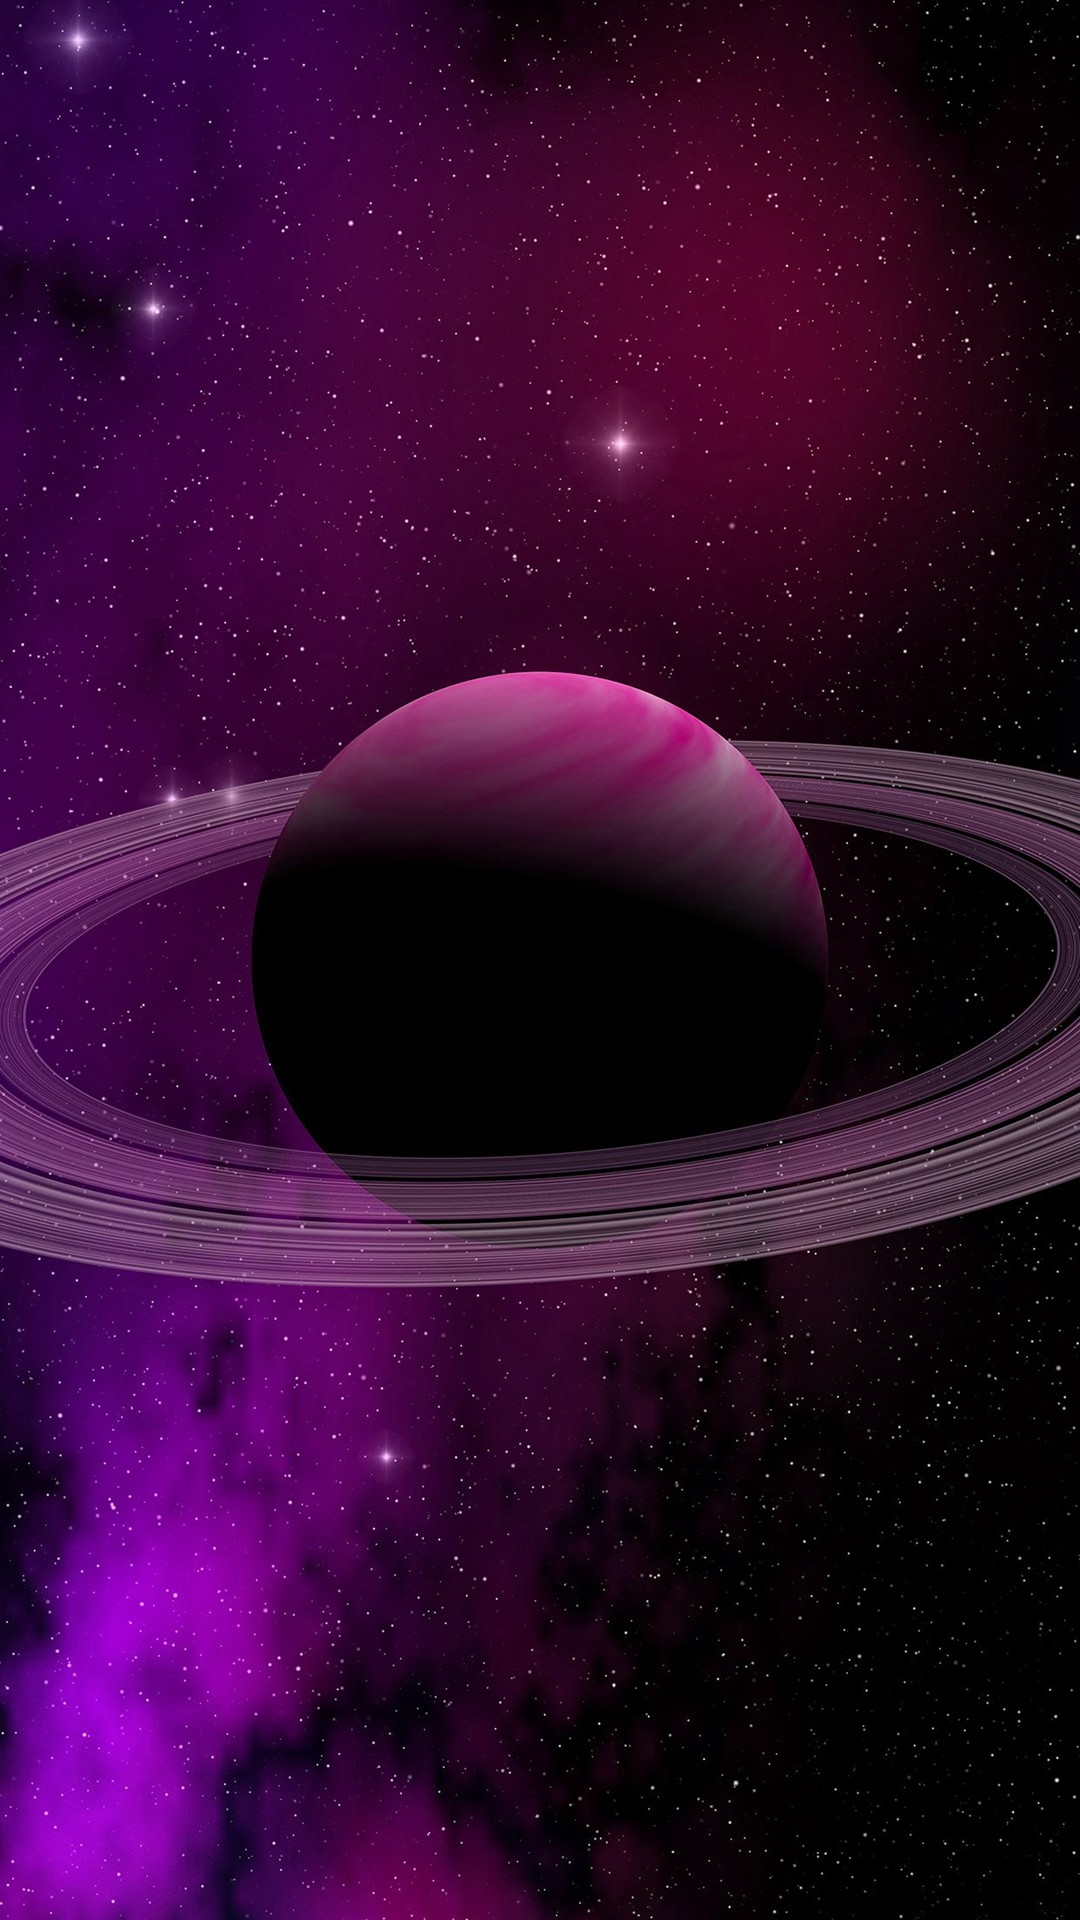 1080x1920 Space Planet Saturn Star Art Illustration Purple #iPhone #6 #wallpaper